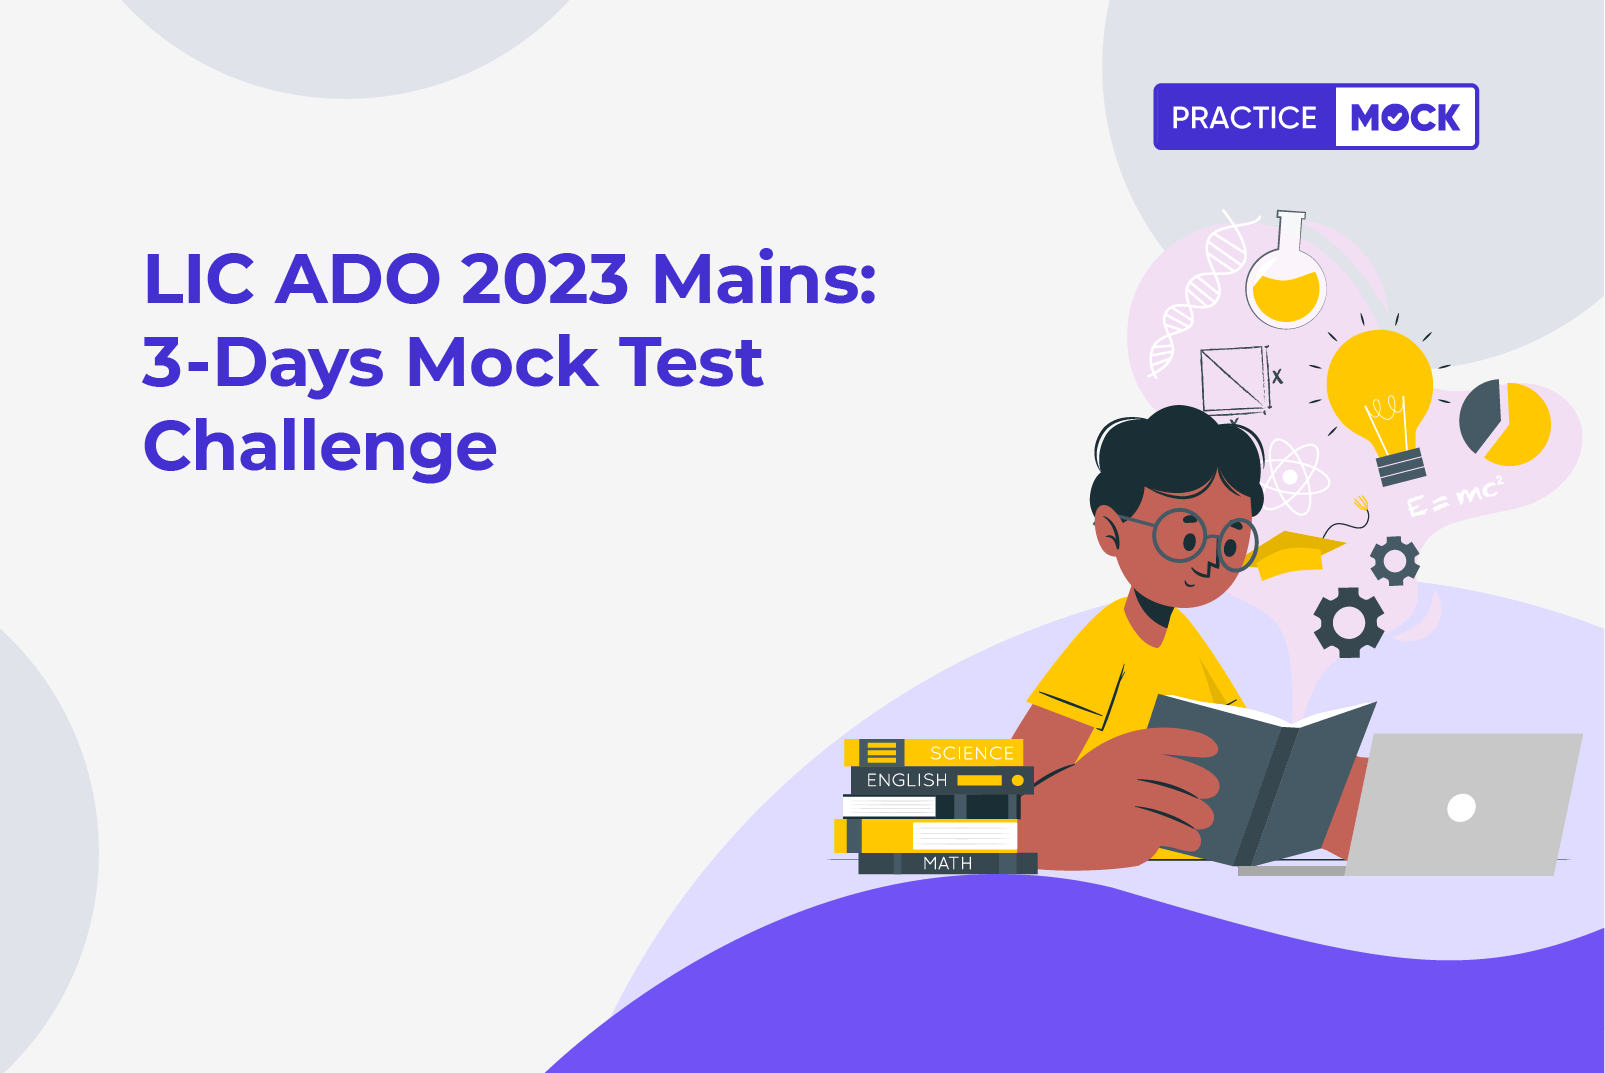 LIC ADO 2023 Mains: 4-Days Mock Test Challenge